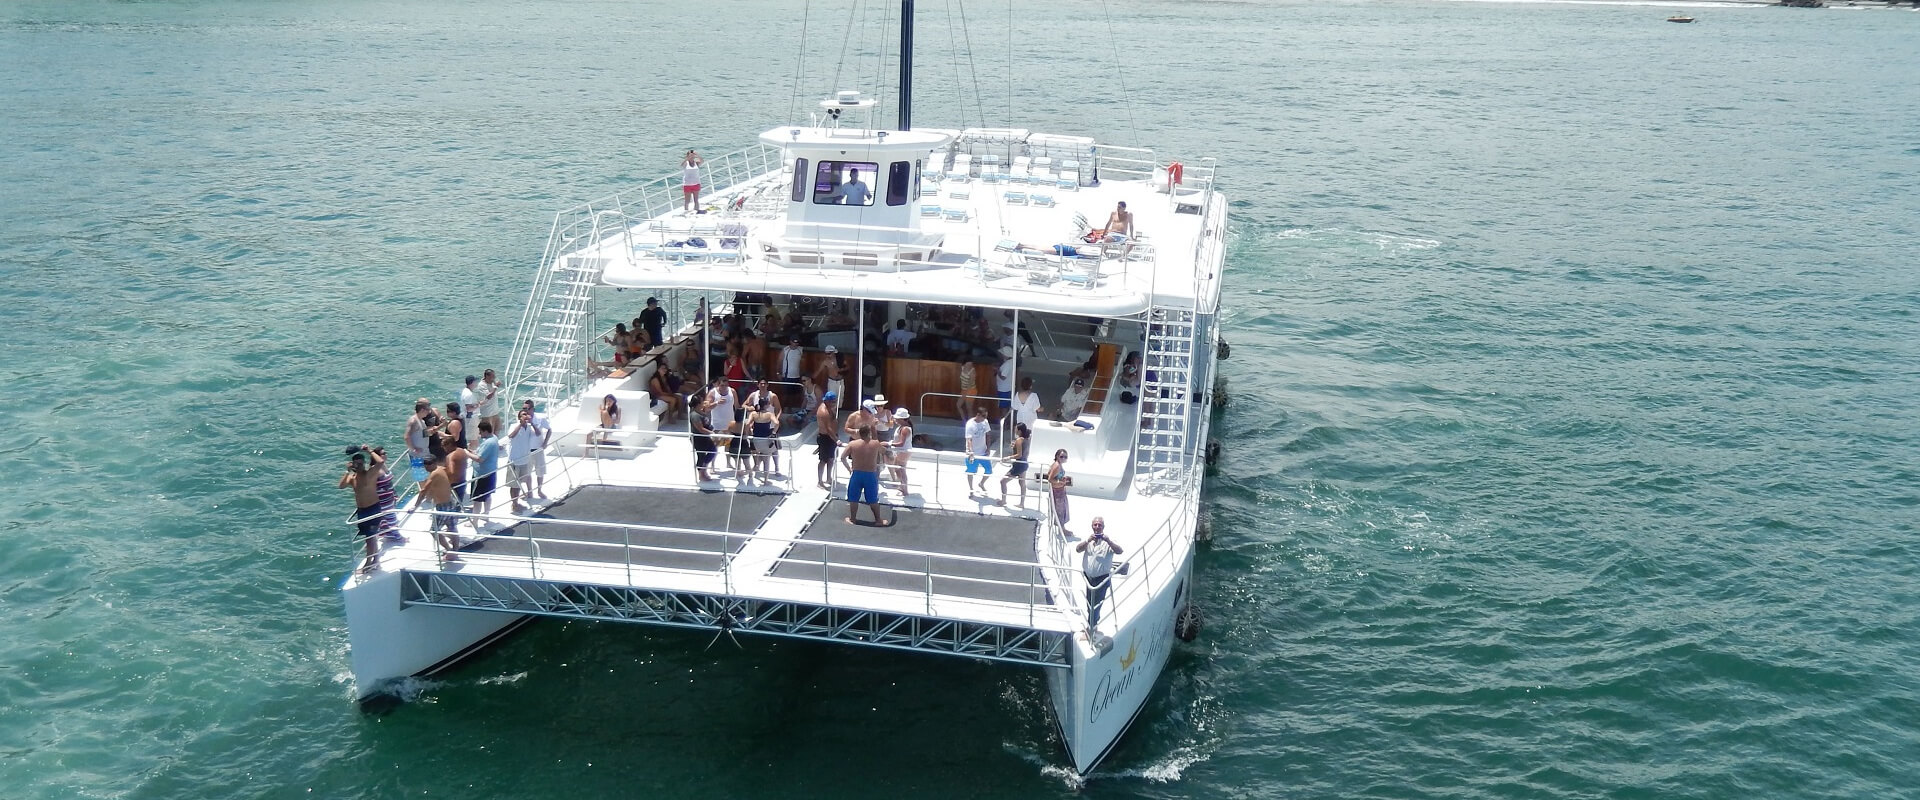 ocean king catamaran tour